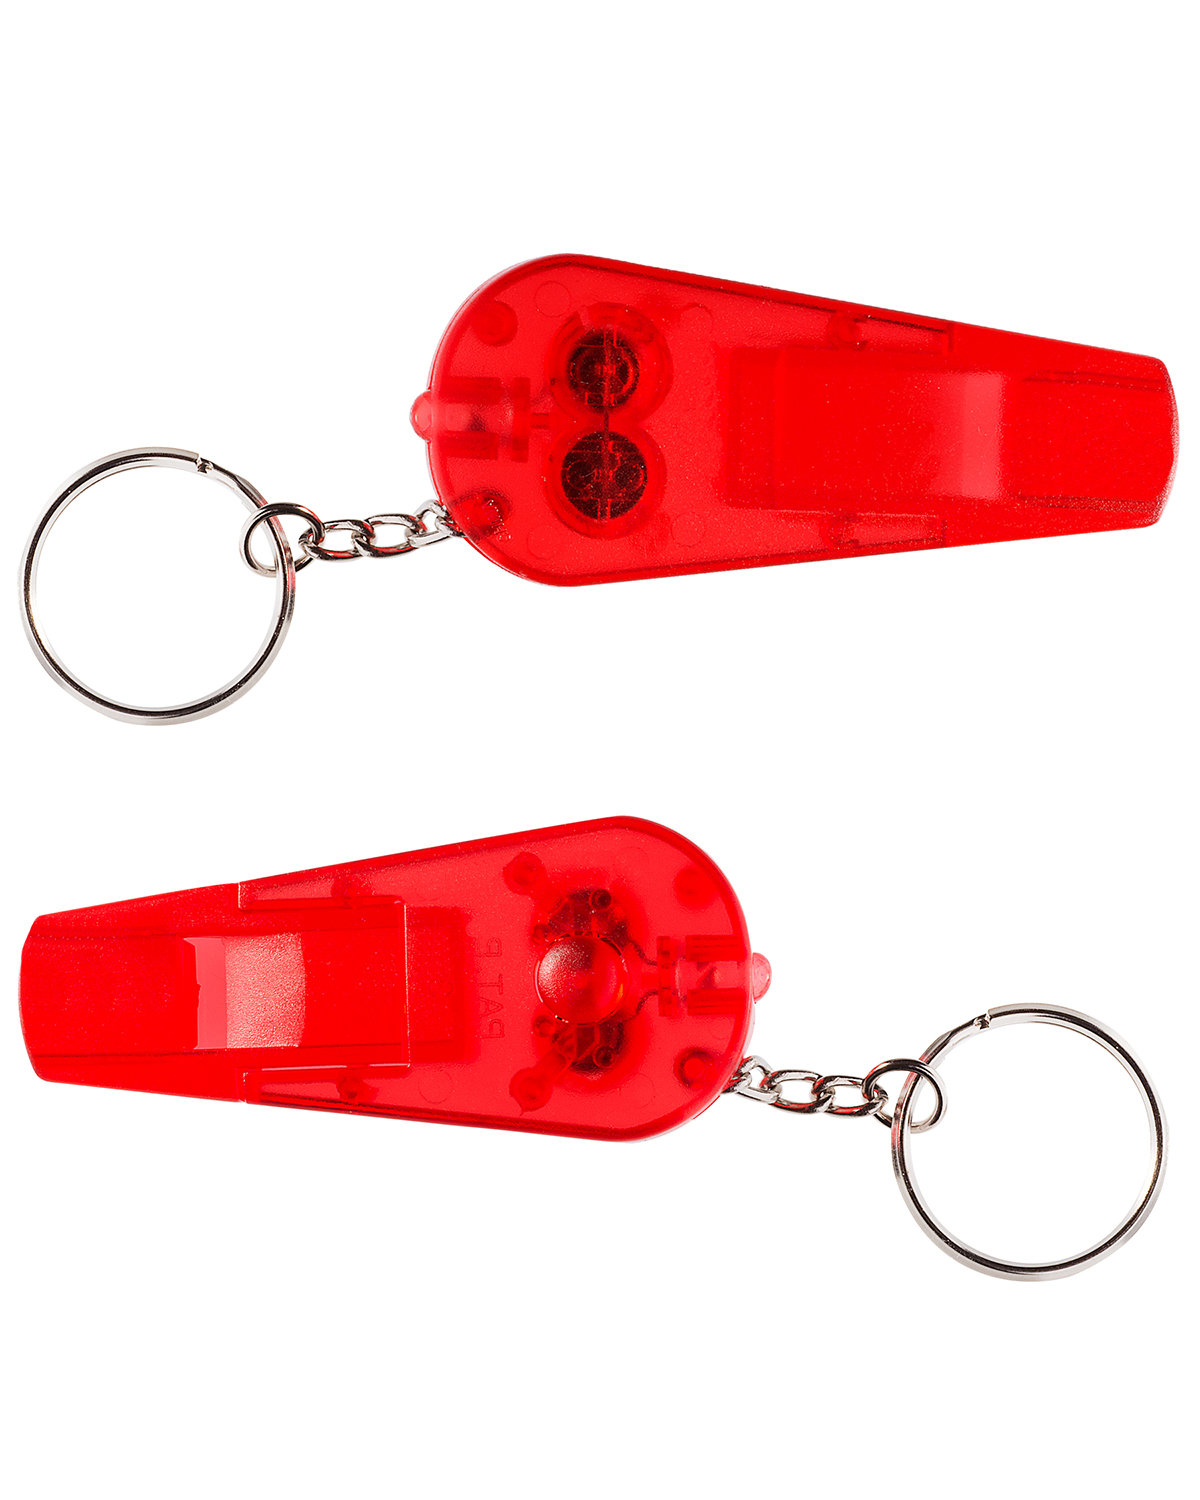 Prime Line Light 'N Whistle Key Tag translucent red 